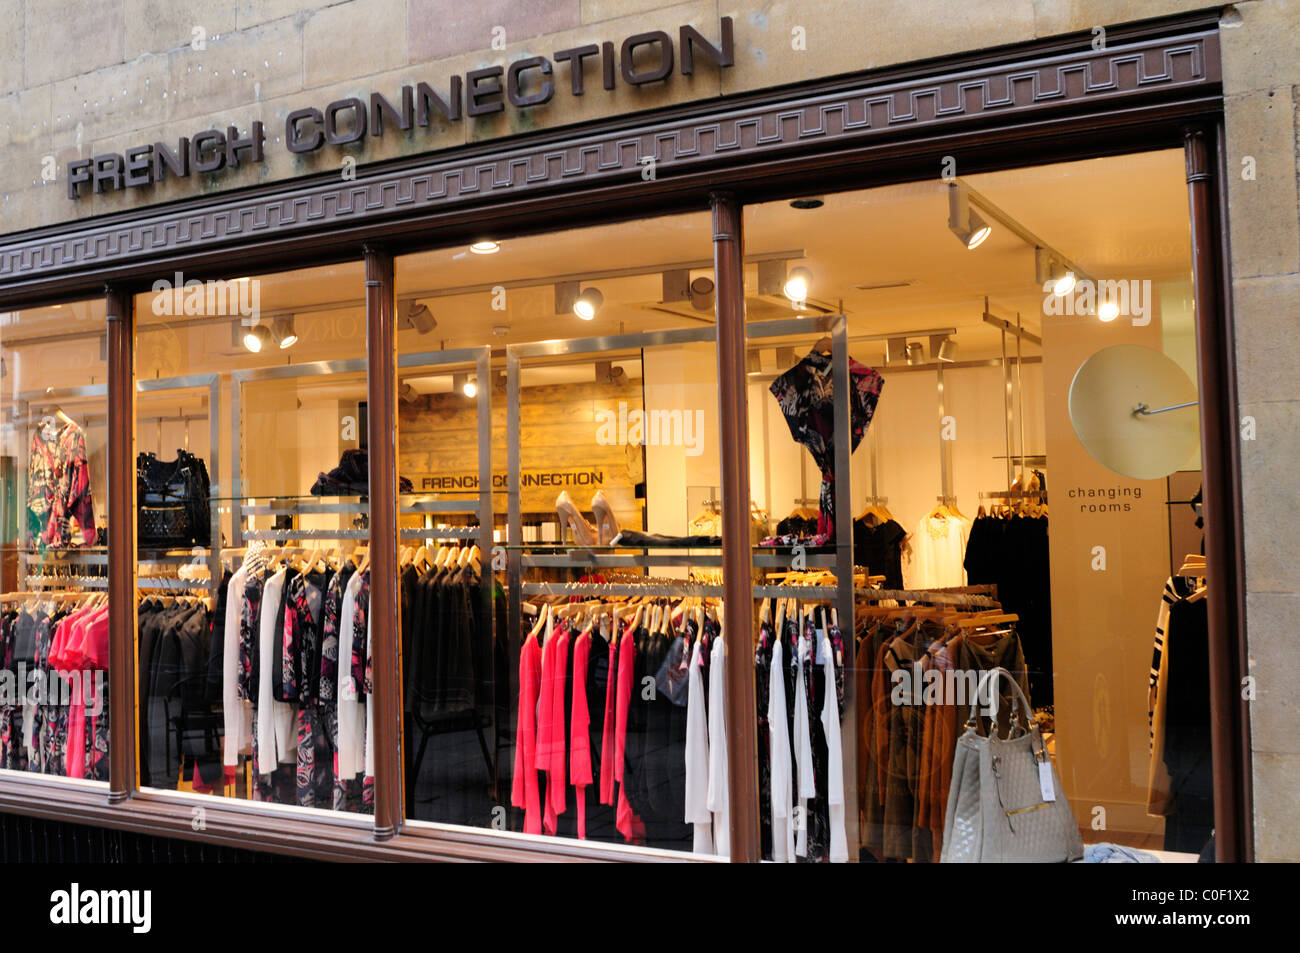 Kaarsen De schuld geven Methode French Connection Women's Clothes Shop, Rose Crescent, Cambridge, England,  UK Stock Photo - Alamy